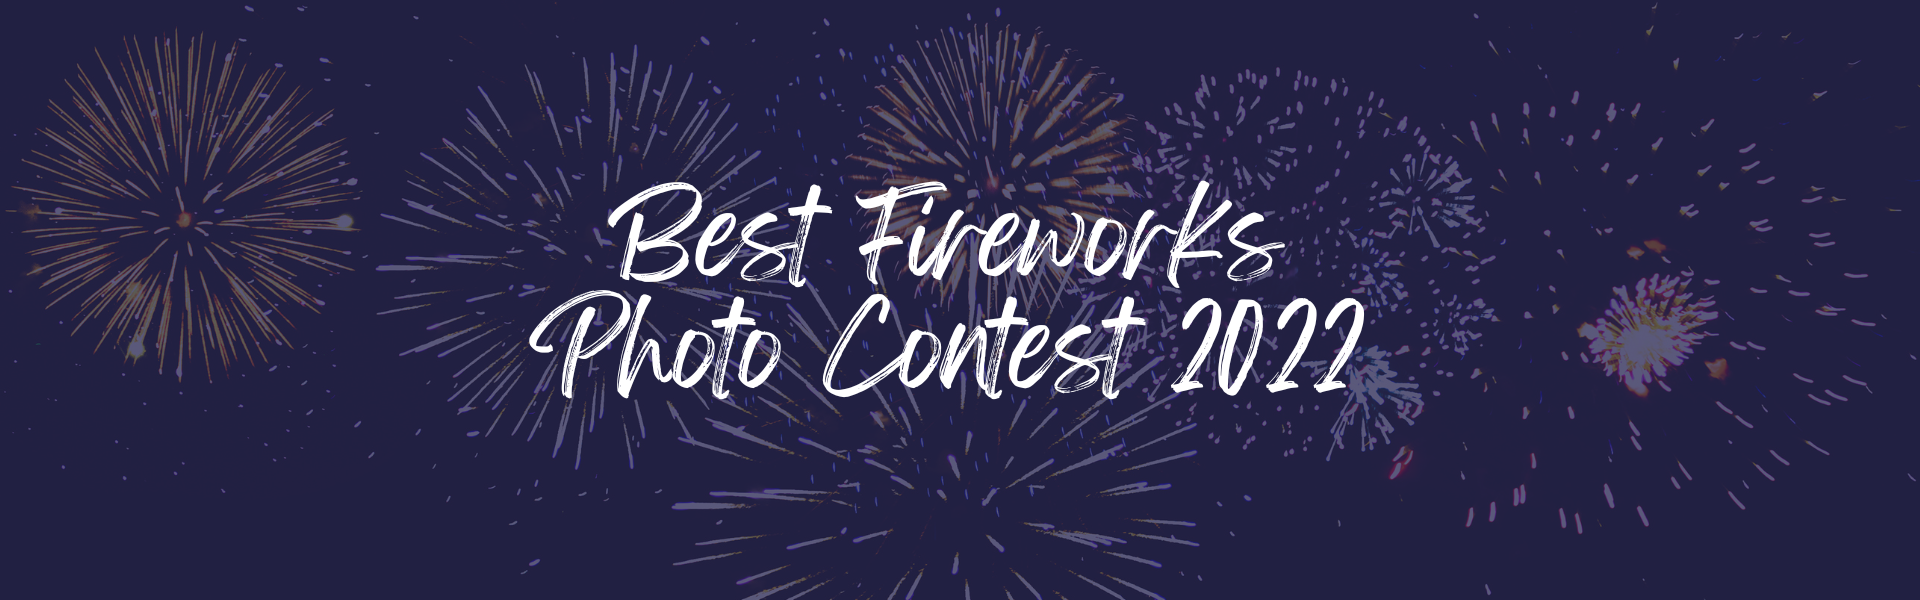 Best Fireworks Photo Contest 2022